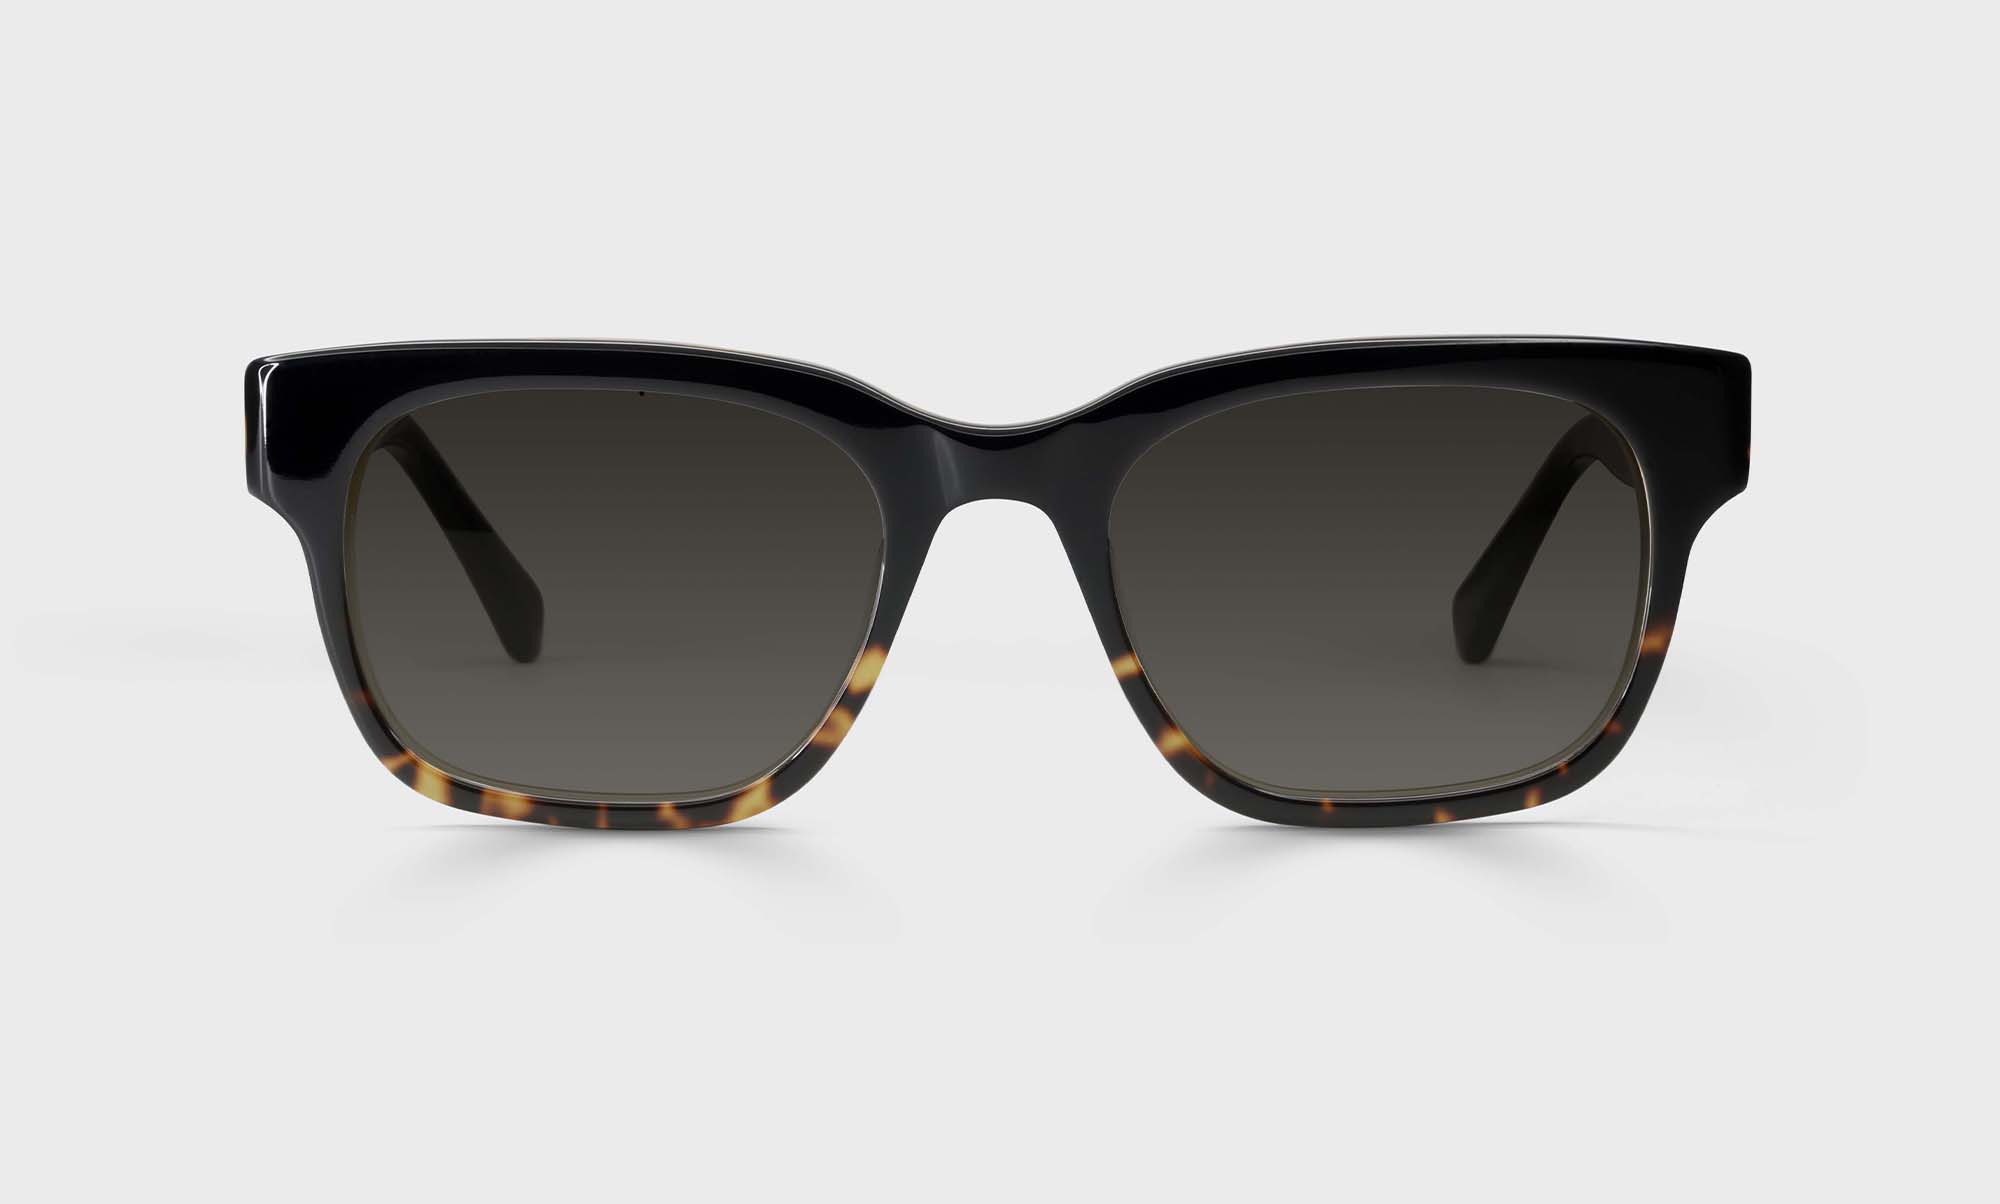 05-pg | bold eyebobs Numero Uno Rectangle Average bifocal reader sunglasses polarized brown sunglasses 